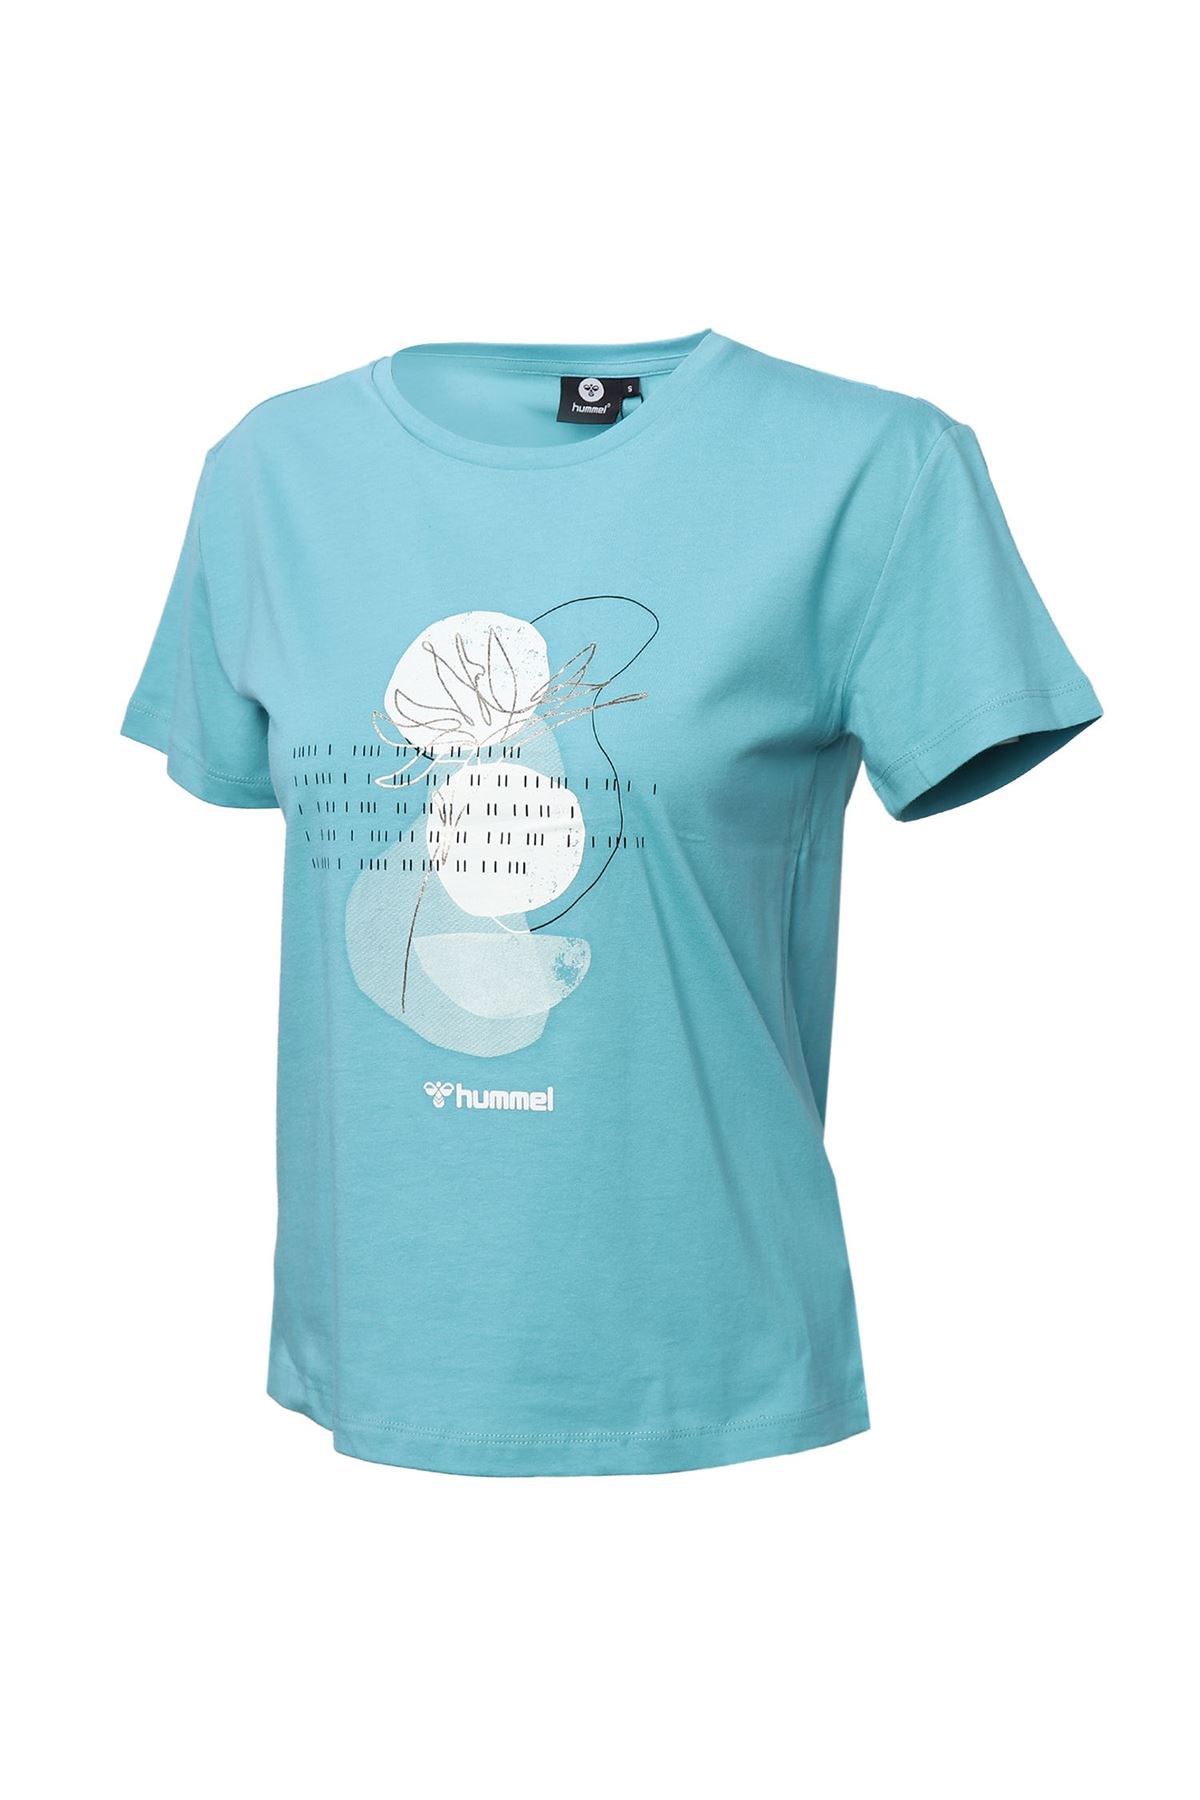 Hummel Kadın T-Shirt 911549-5519 Turquıse Tonıc